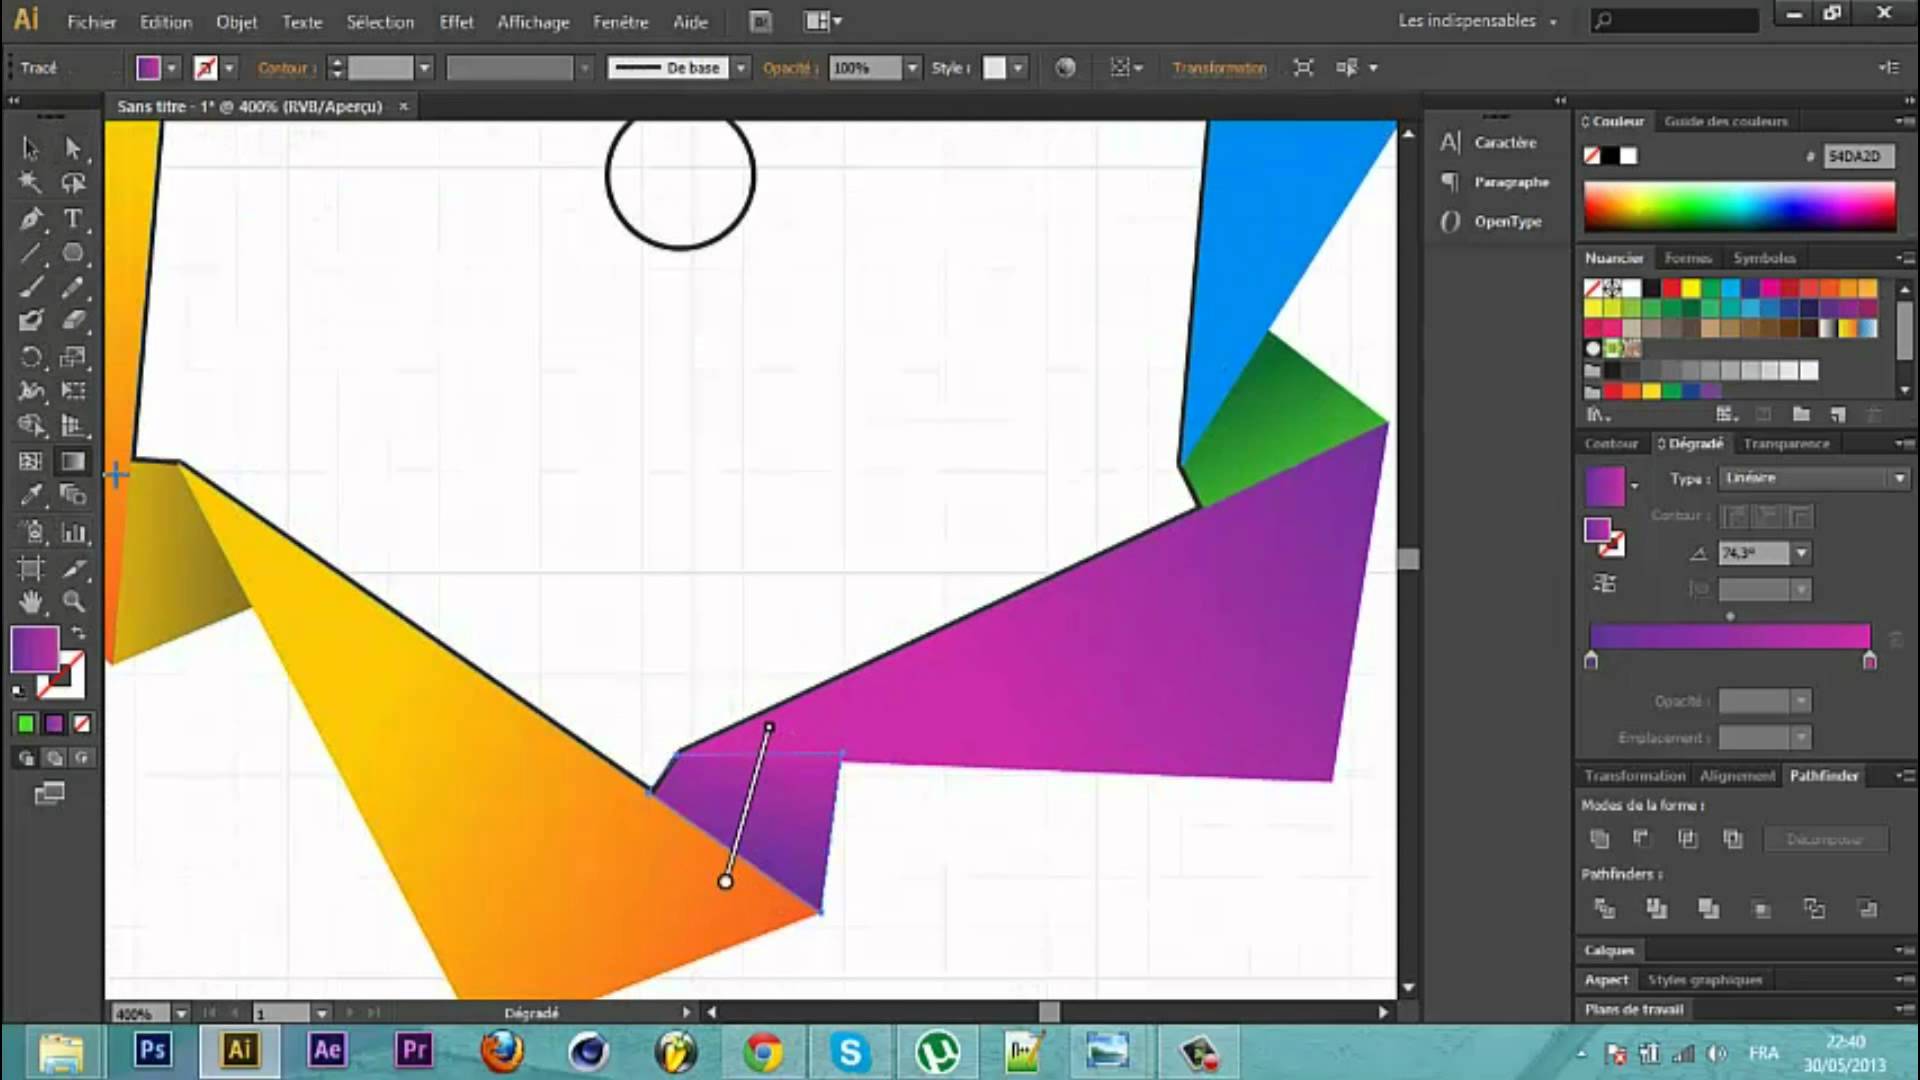 Adobe Illustrator CC 2015 19.0.1 download